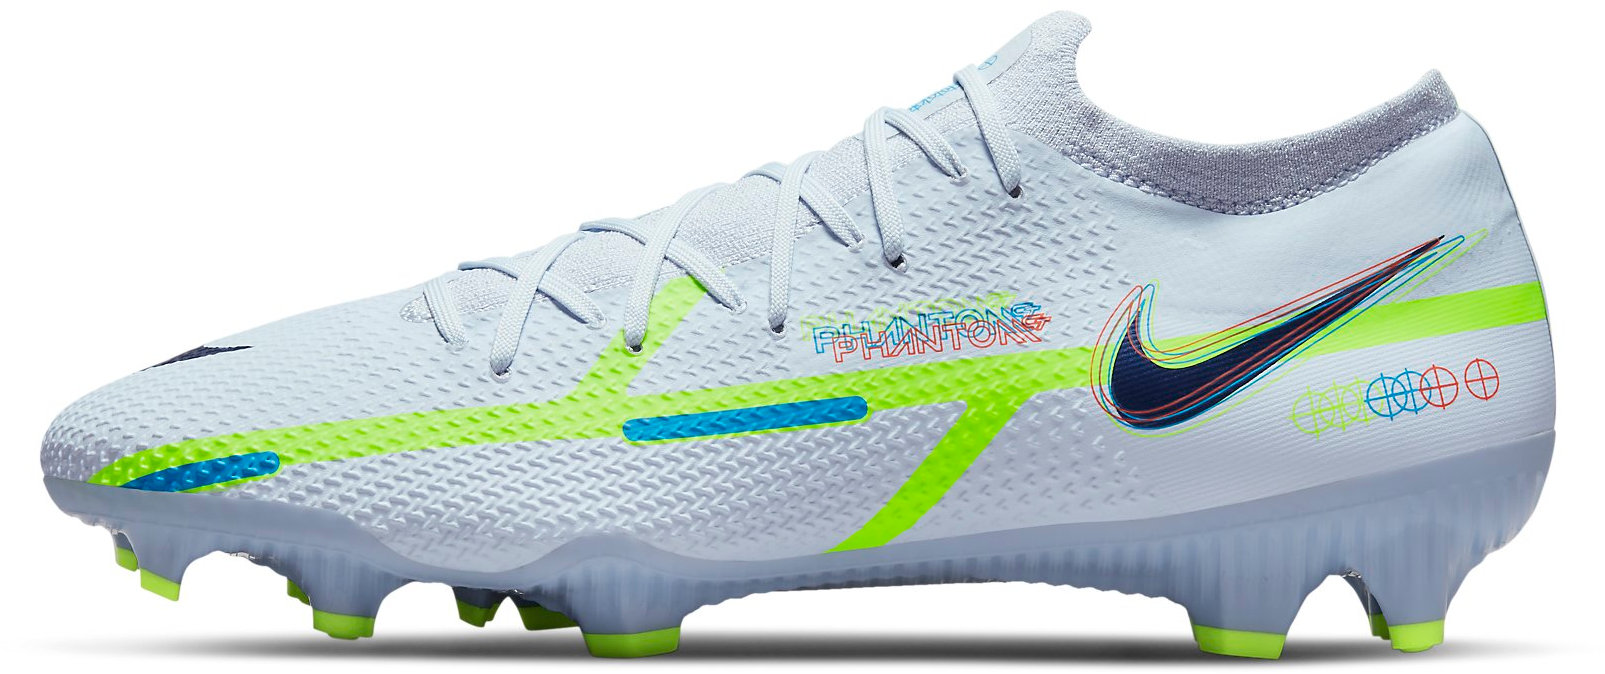 Nogometni čevlji Nike PHANTOM GT2 PRO FG